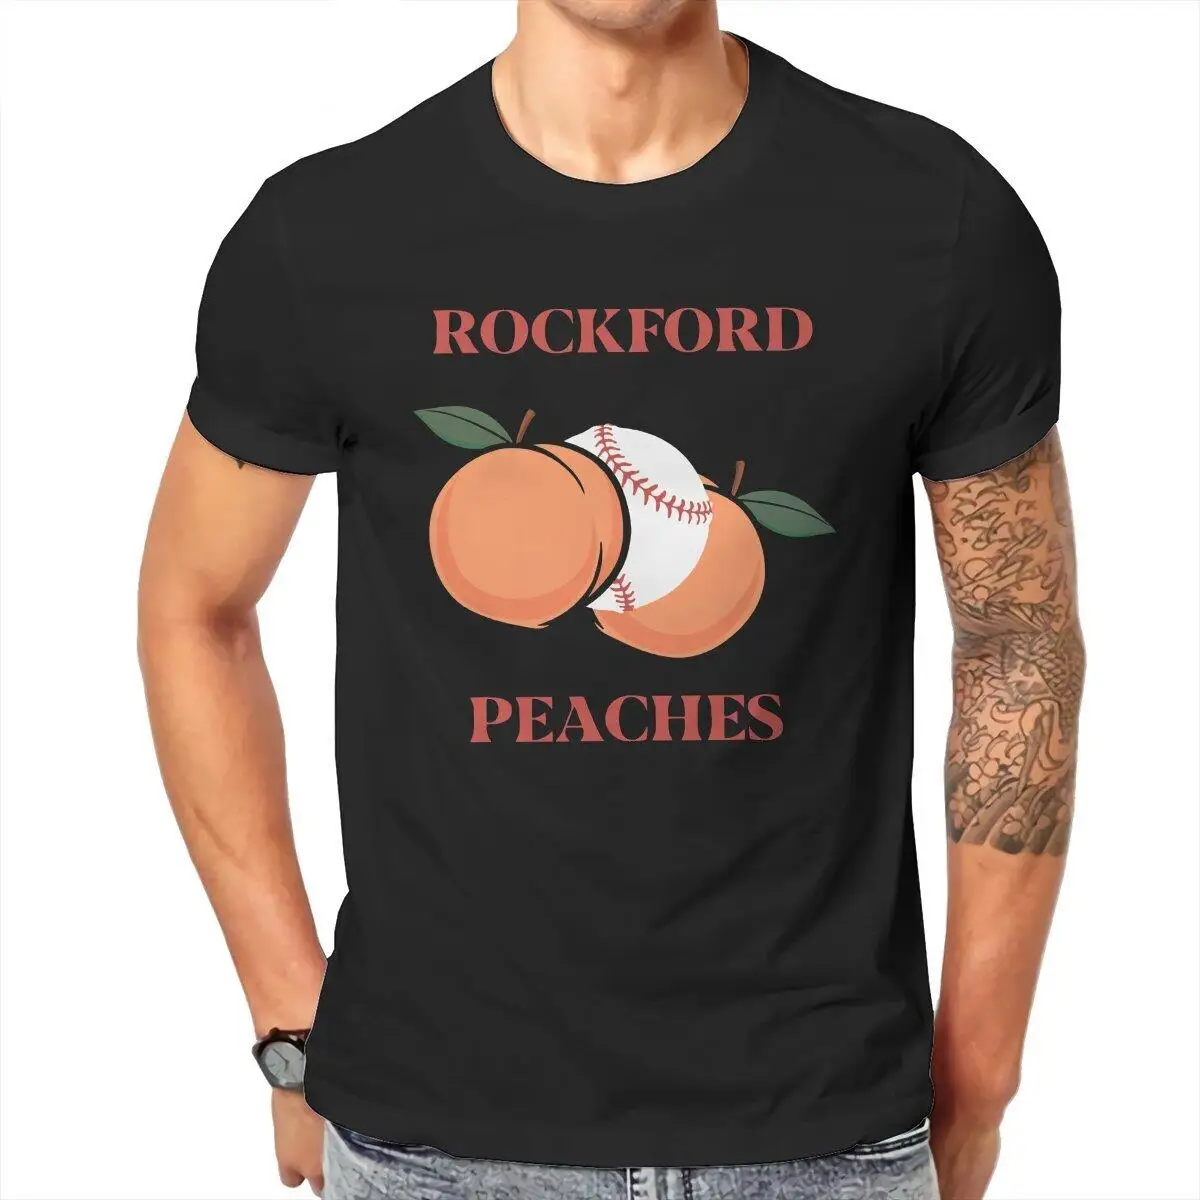 Rockford Peaches A League of Their Own Men T Shirts Baseball Novelty Tees T-Shirt Pure Cotton Birthday Present Clothes